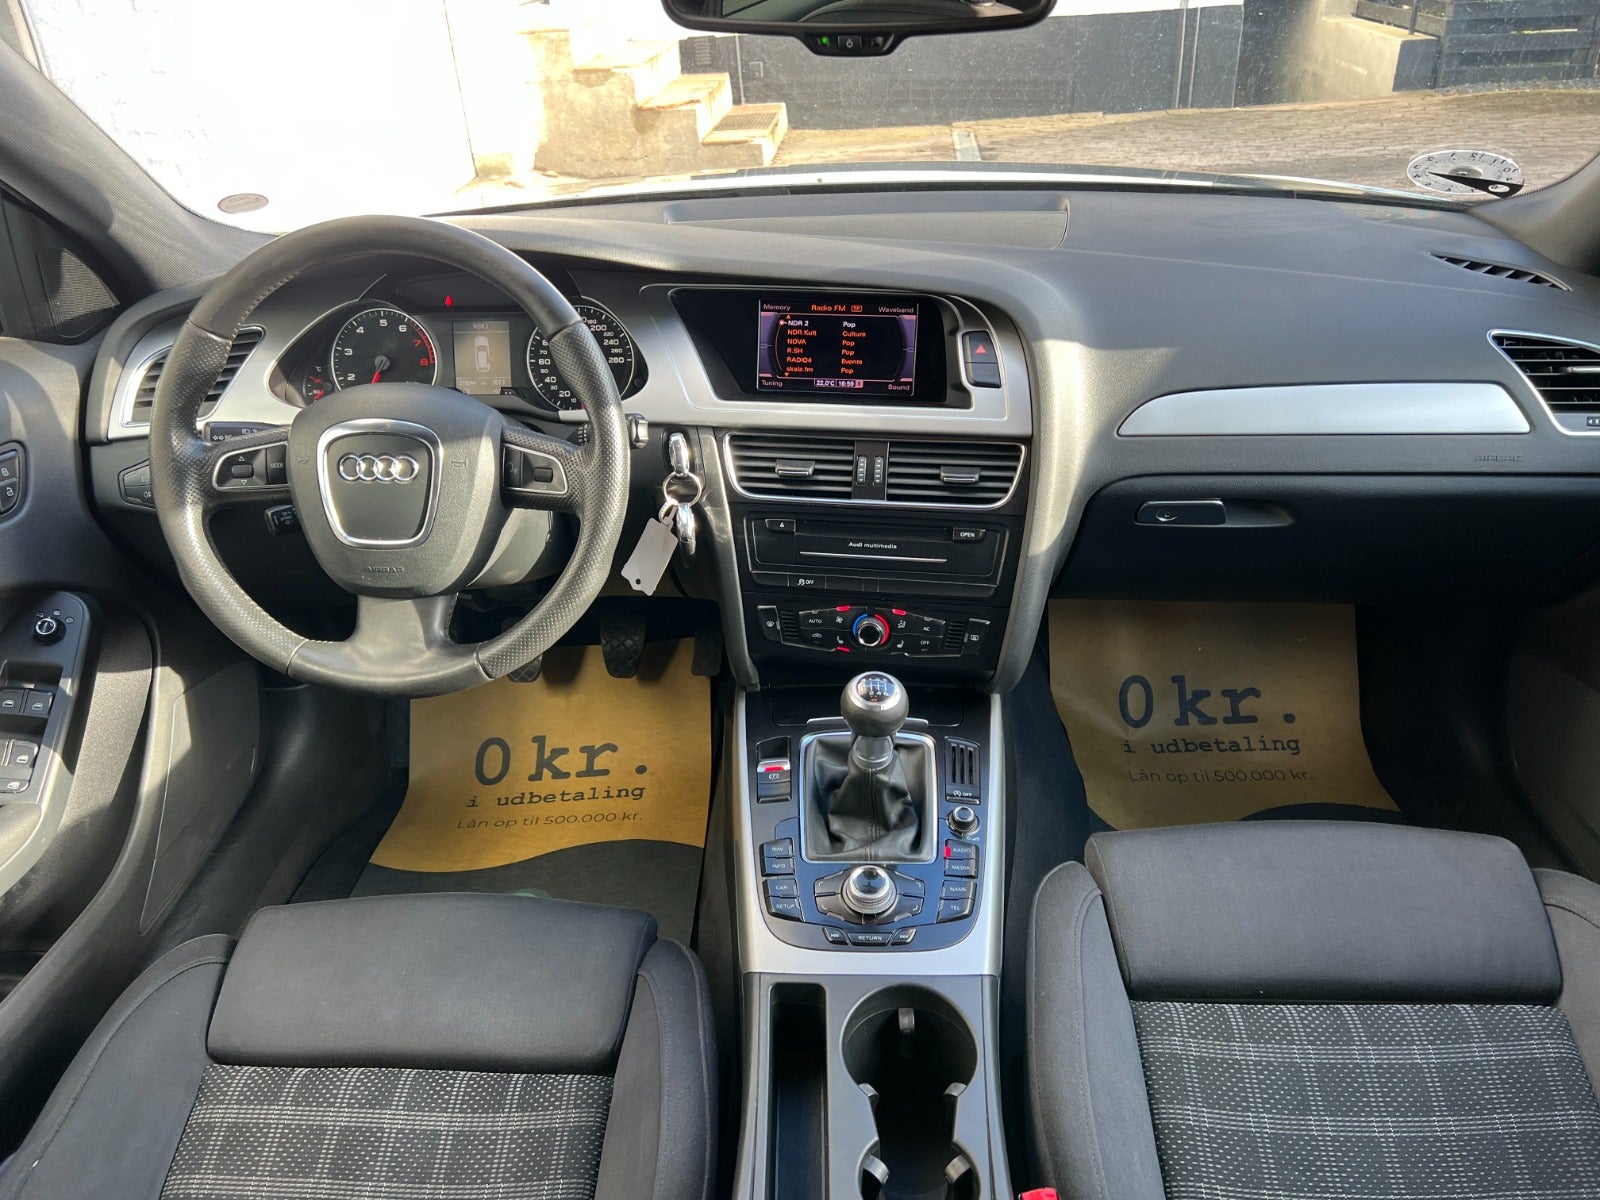 Audi A4 2,0 TFSi 180 Avant Benzin modelår 2011 km 218000 Koks